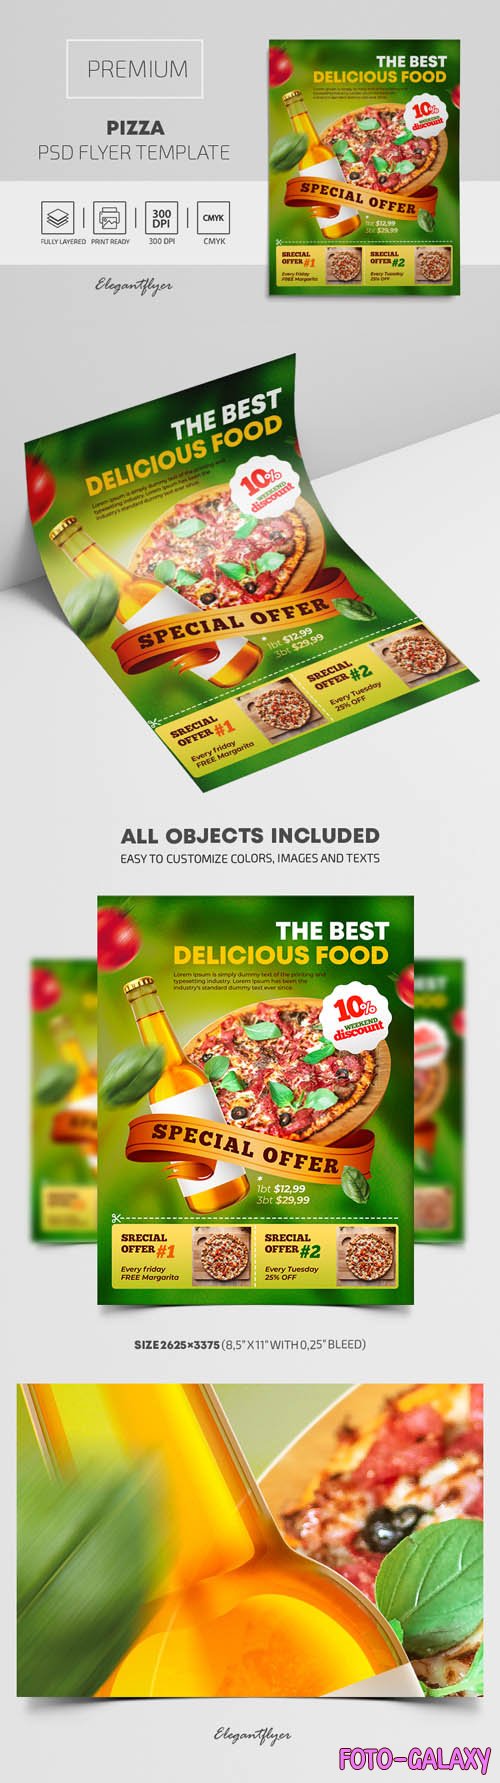 Pizza Premium PSD Flyer Template